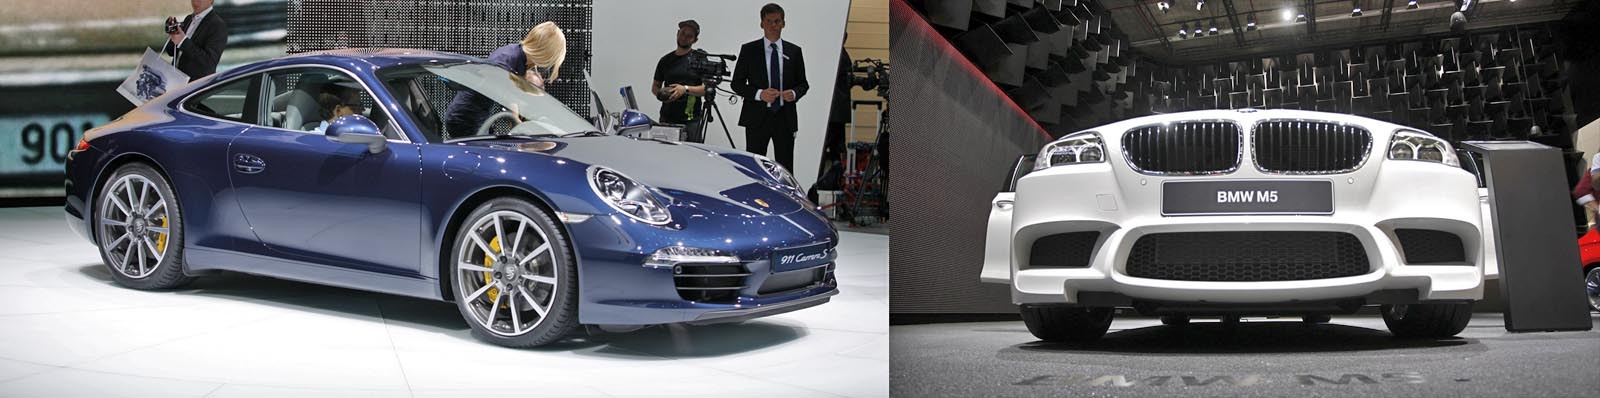 Porsche 911 vs. BMW M5